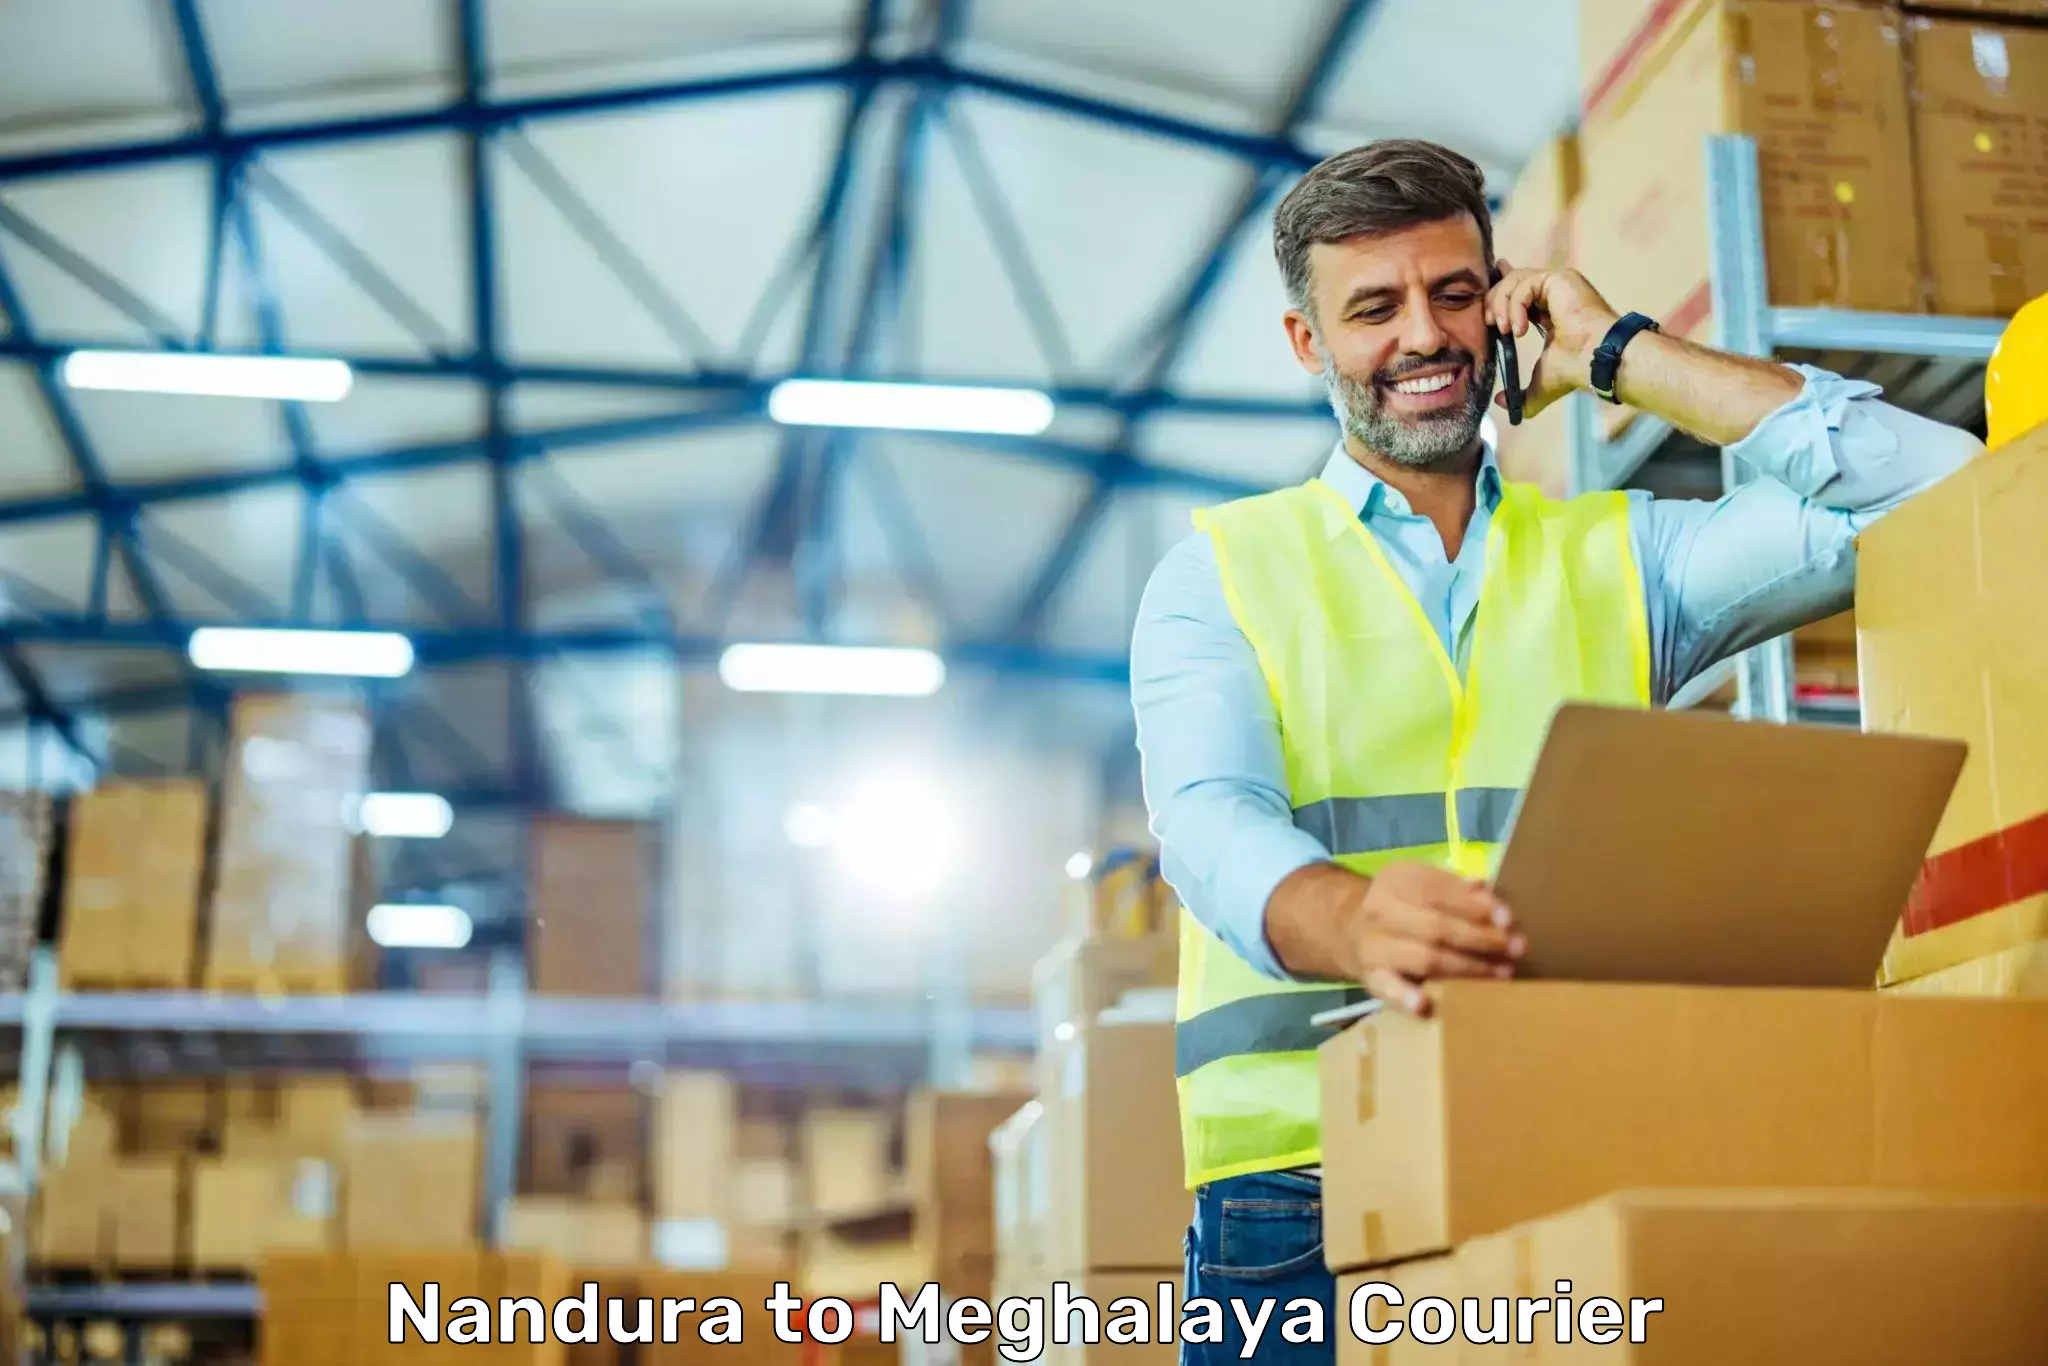 Cash on delivery service Nandura to Tura